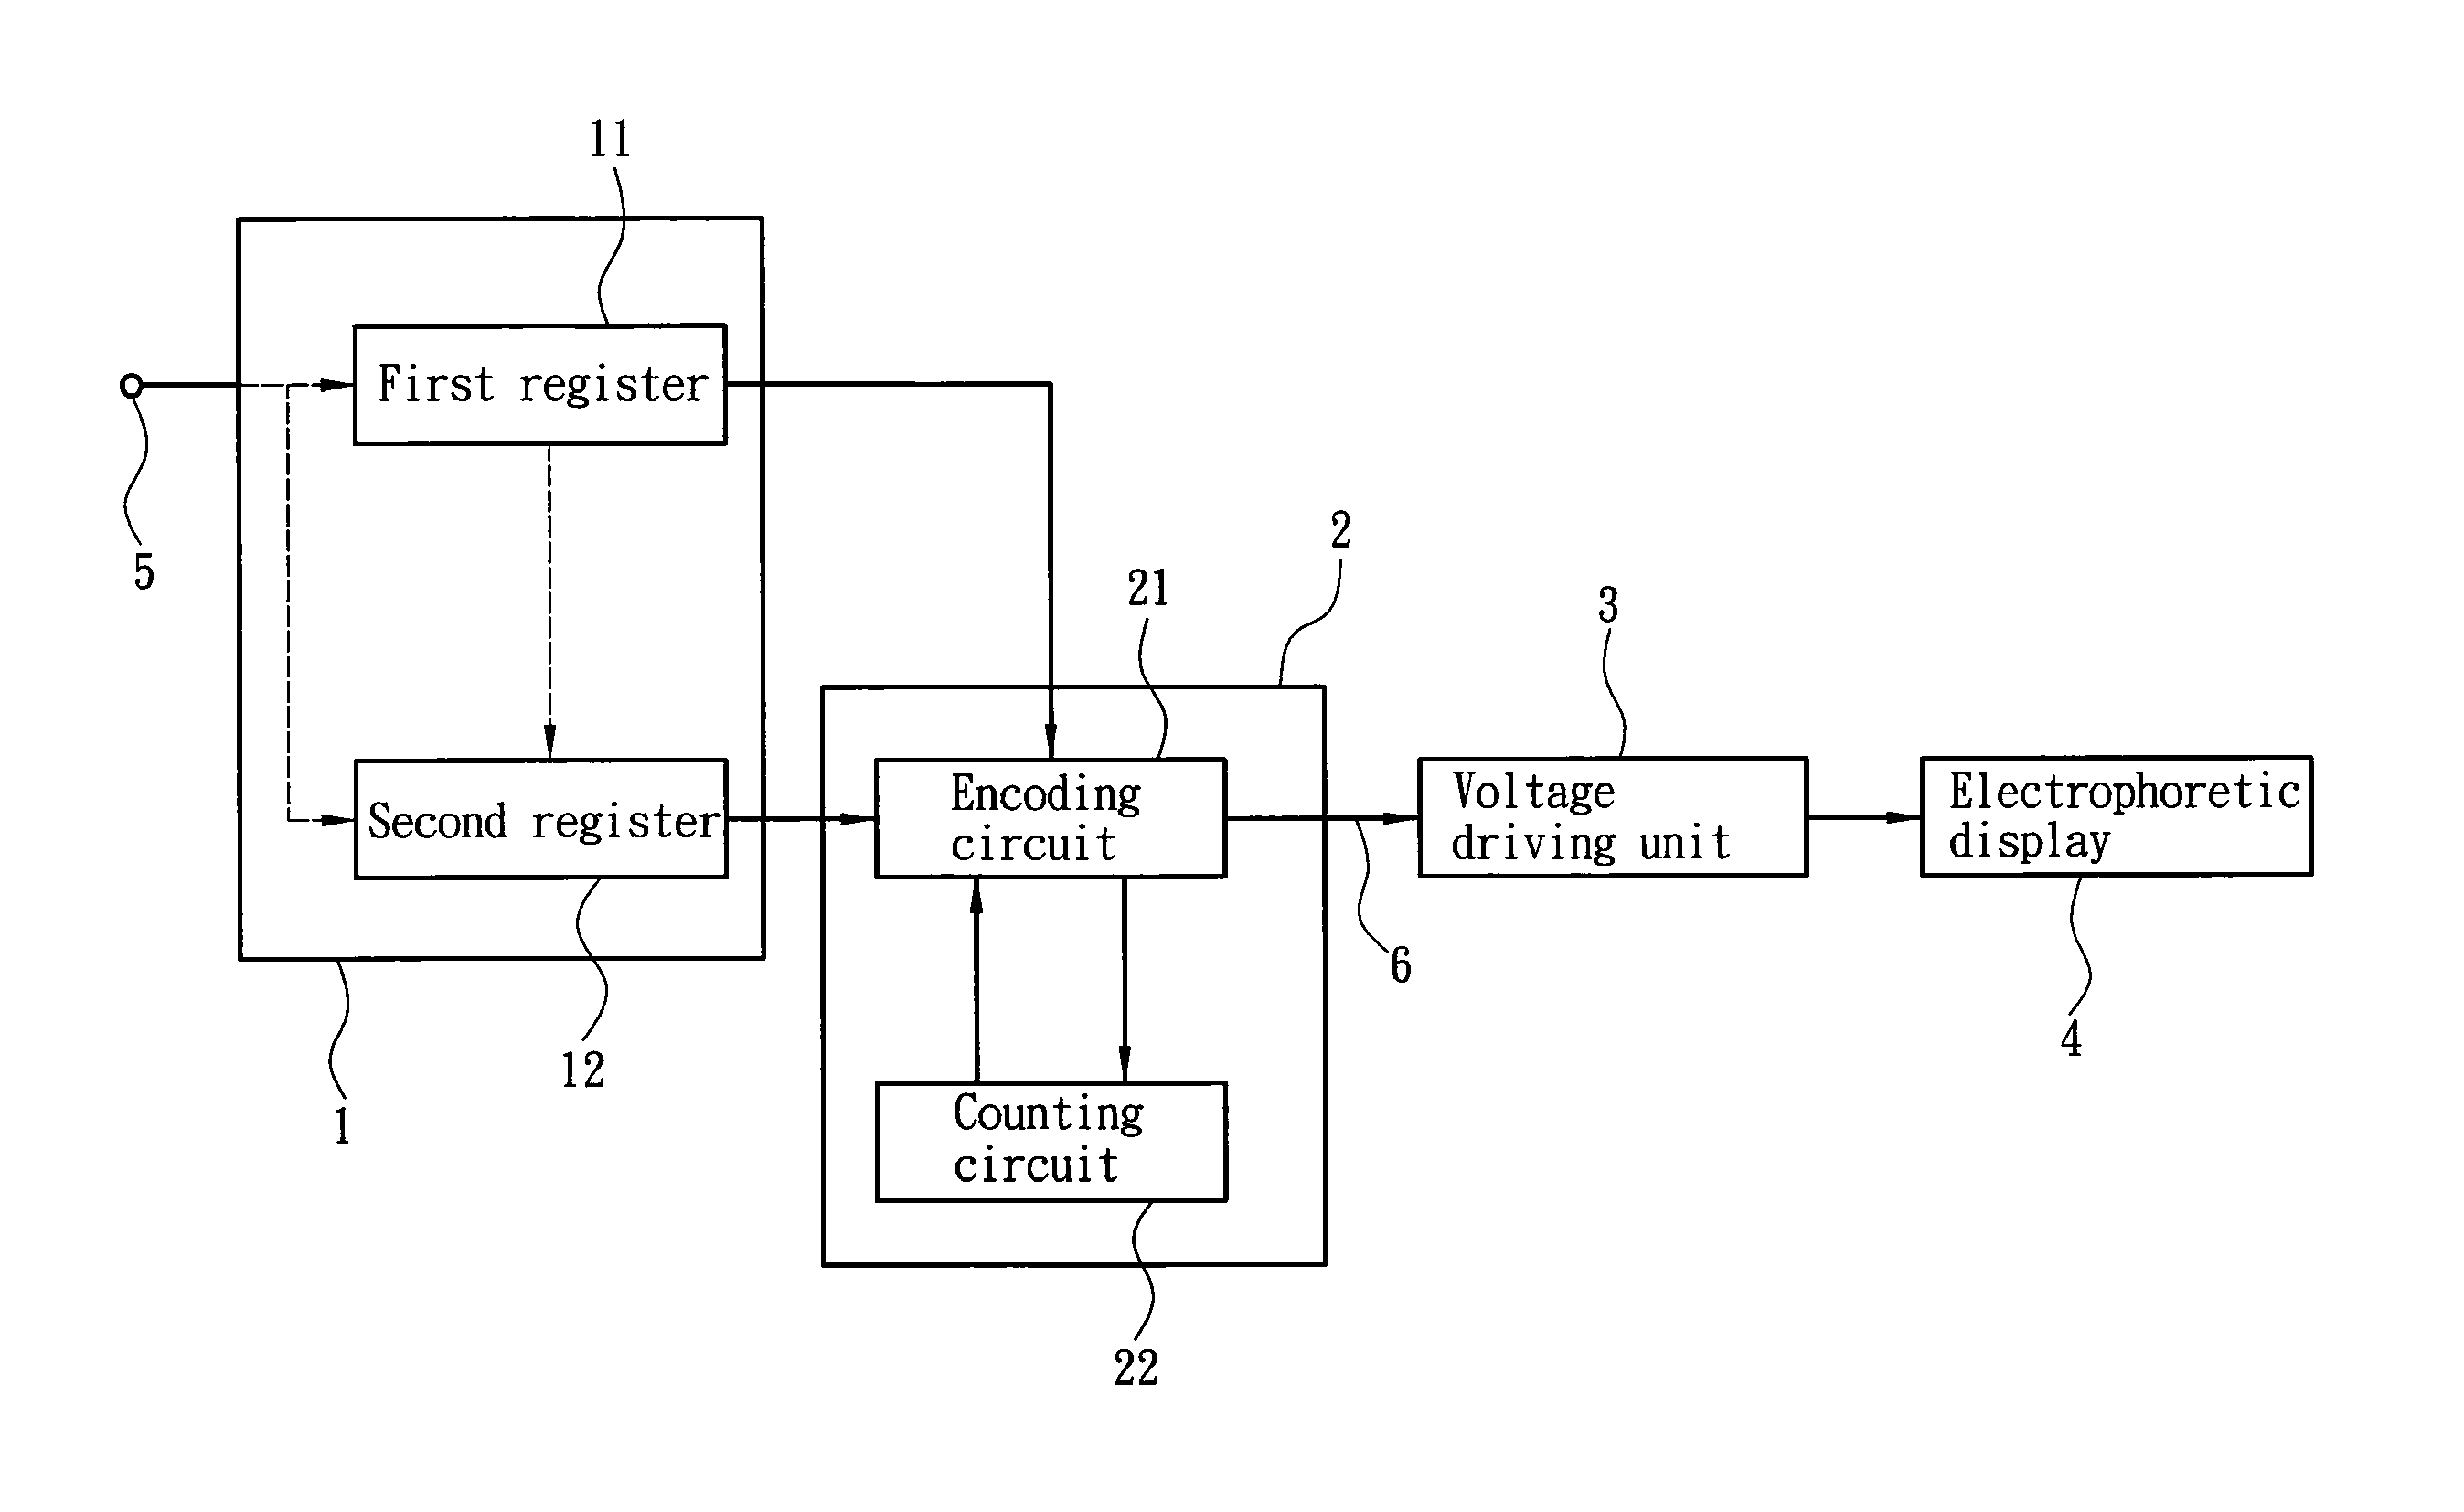 Multiplex electrophoretic display driver circuit